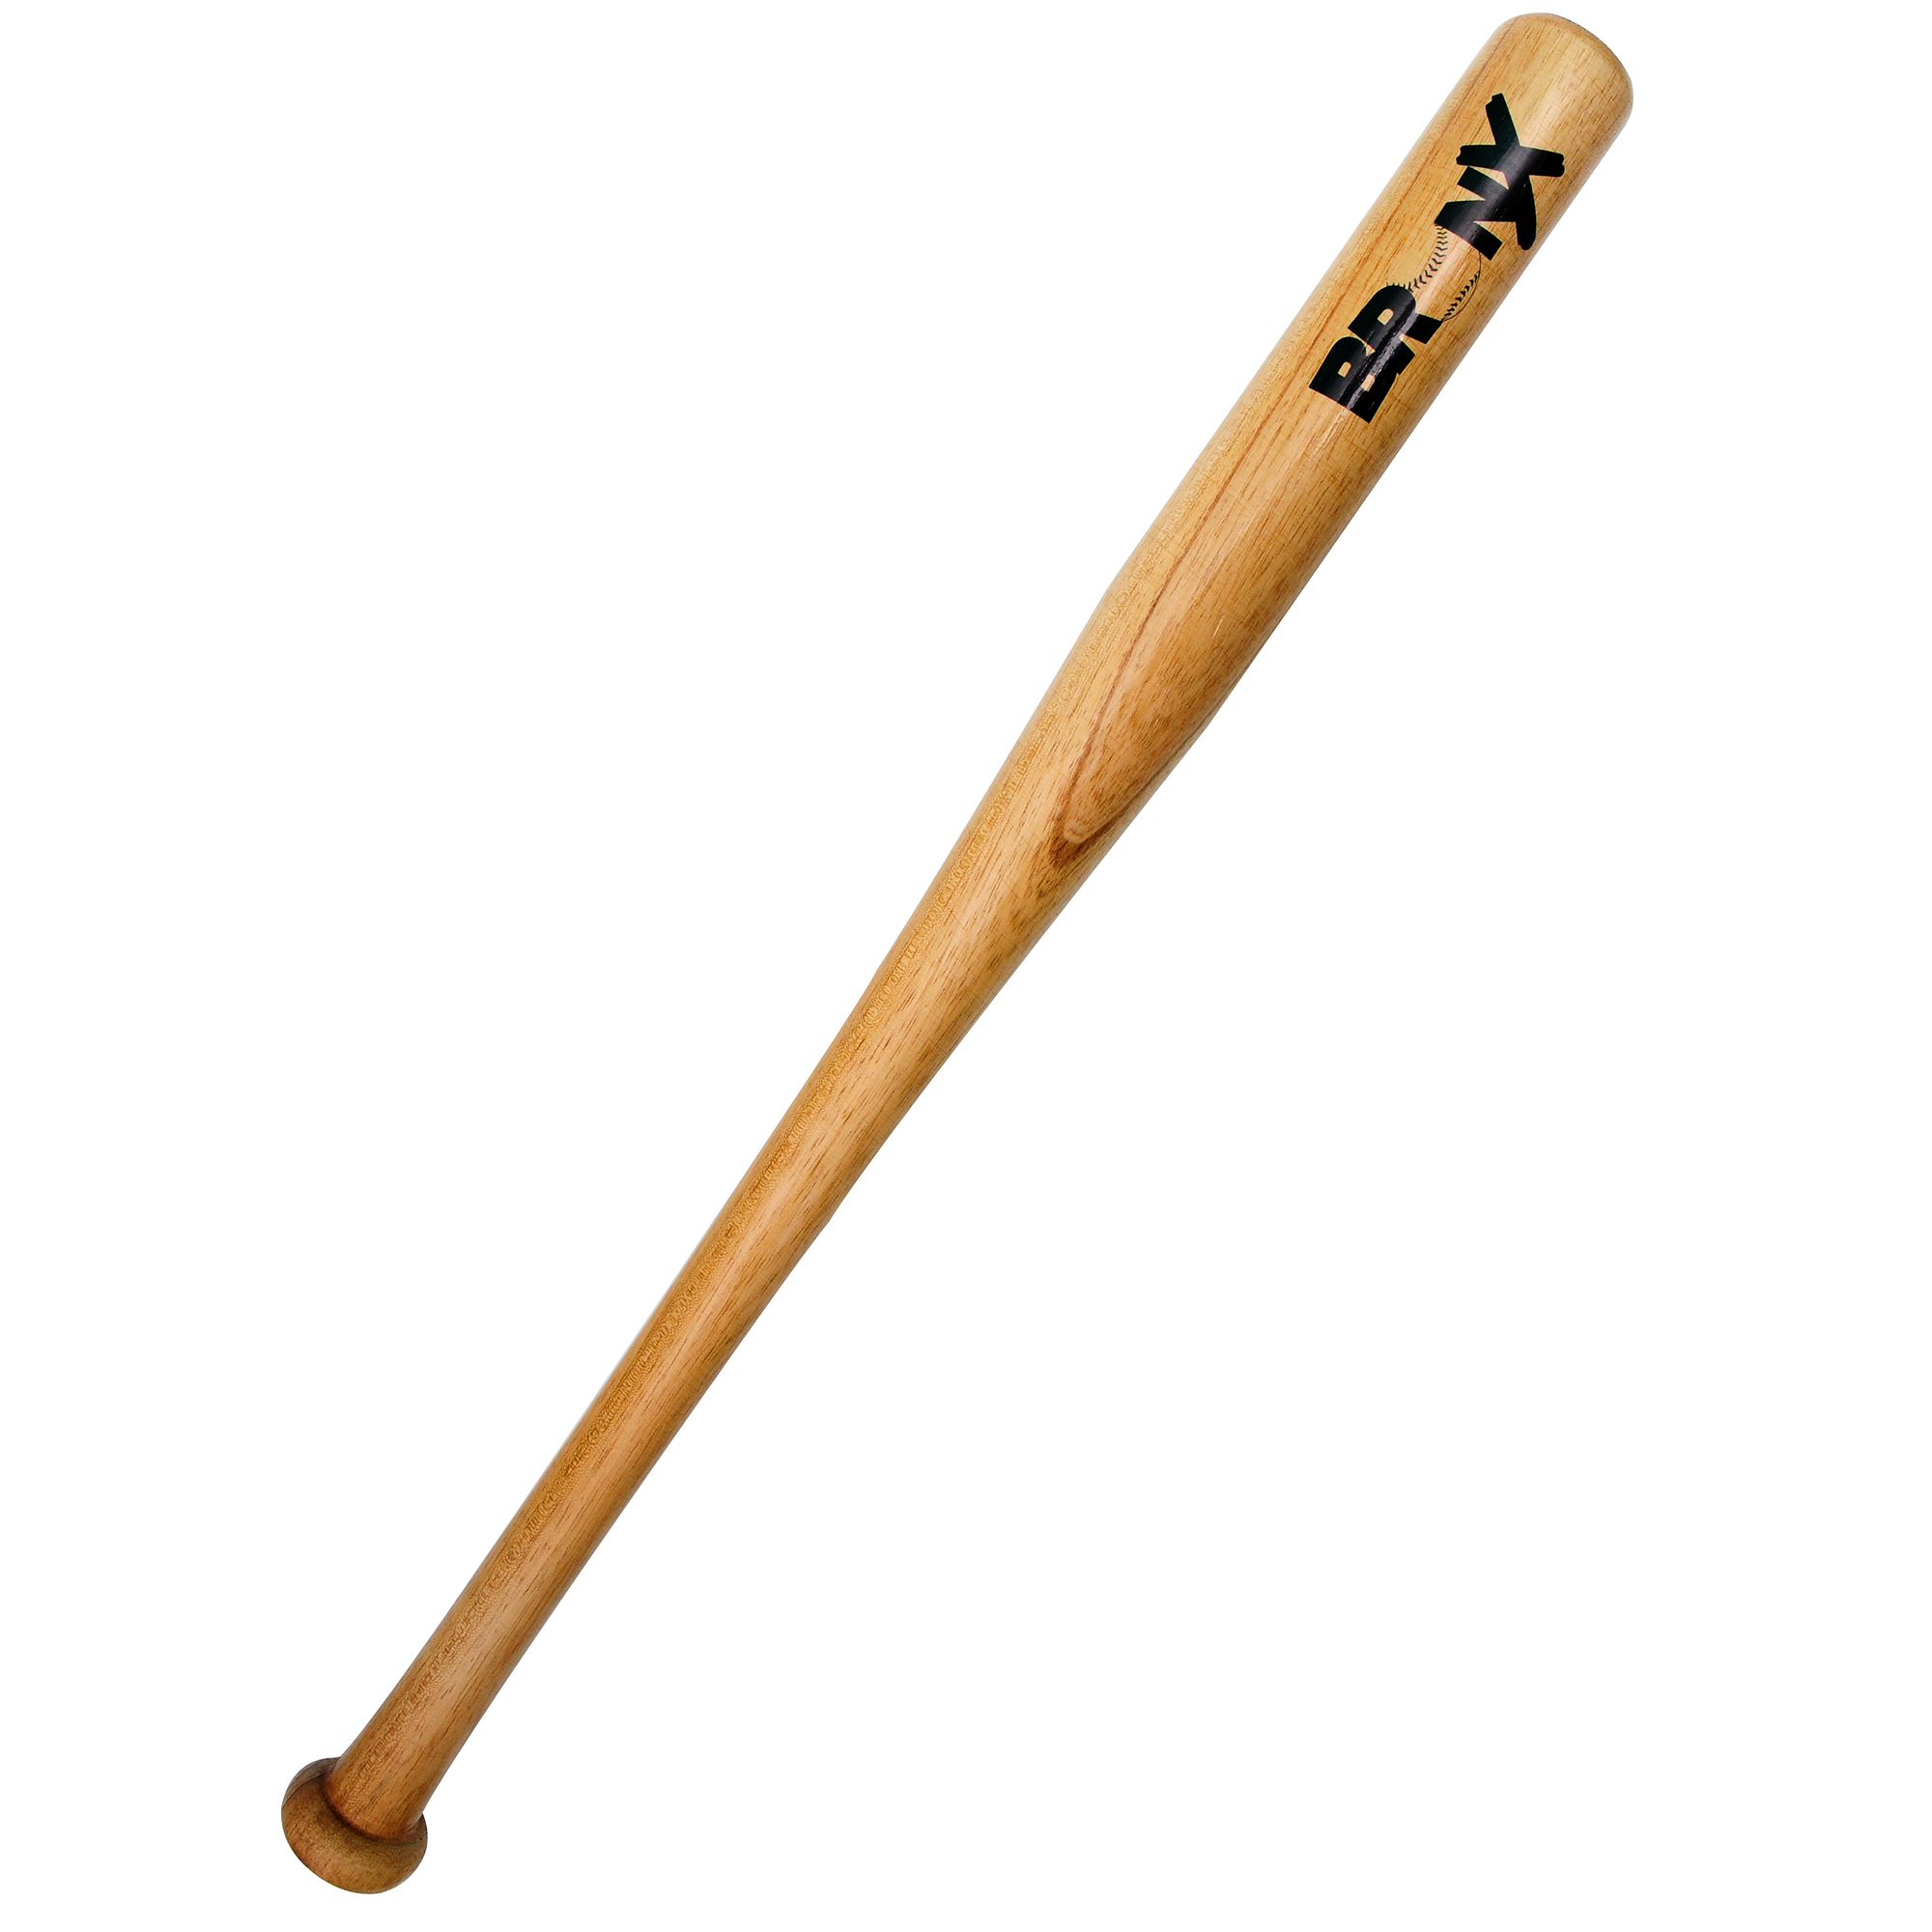 ISBP8   Bronx Wooden Baseball Bat   Junior   8in   Findel ...